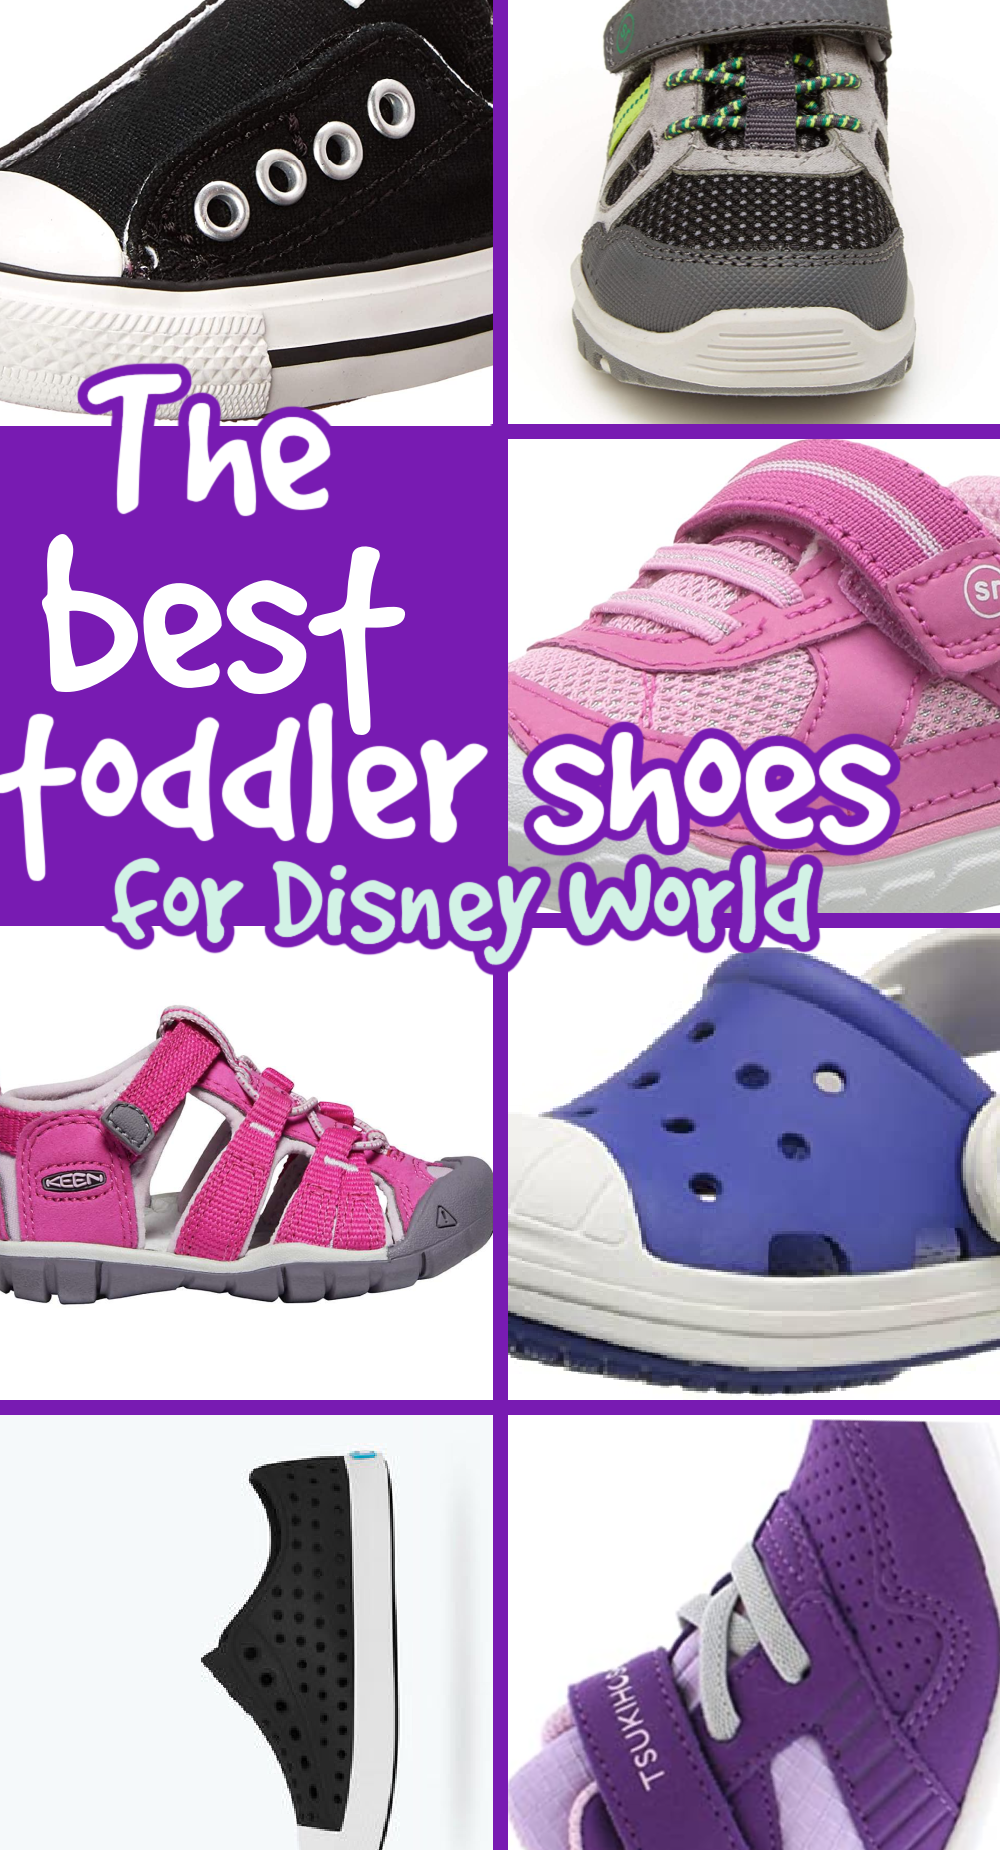 best toddler shoes for disney world